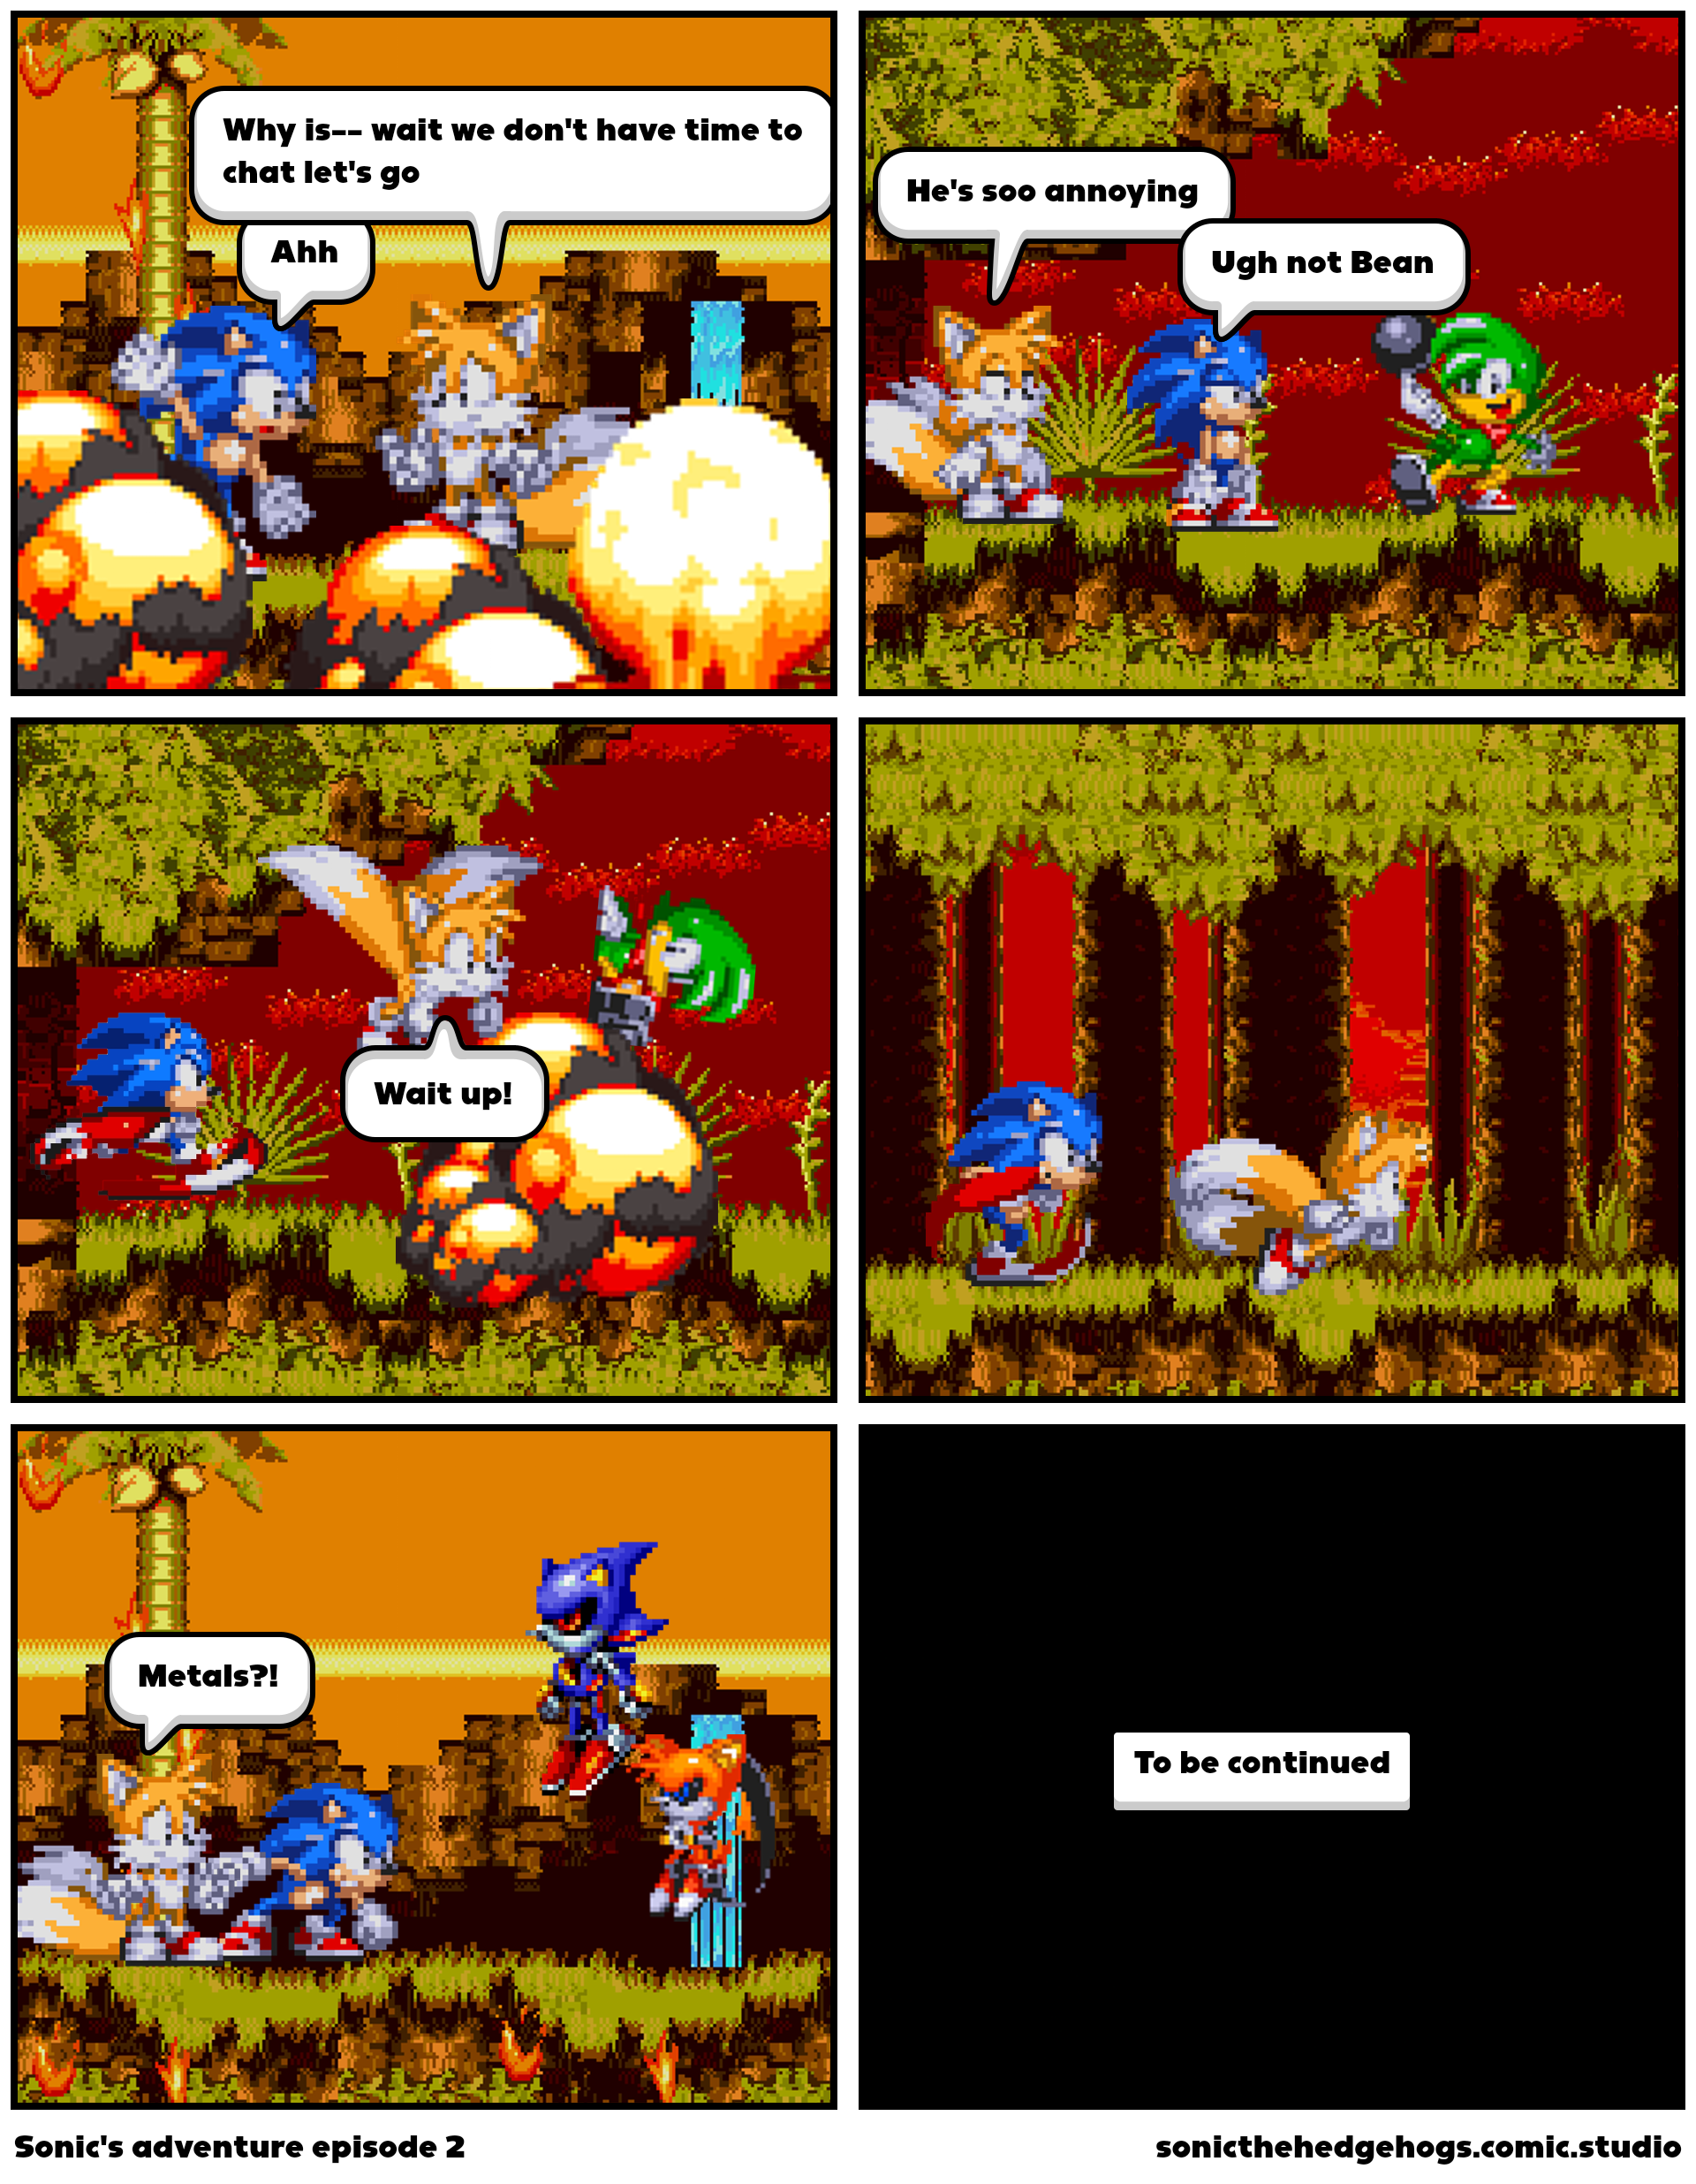 Sonic's adventure episode 2